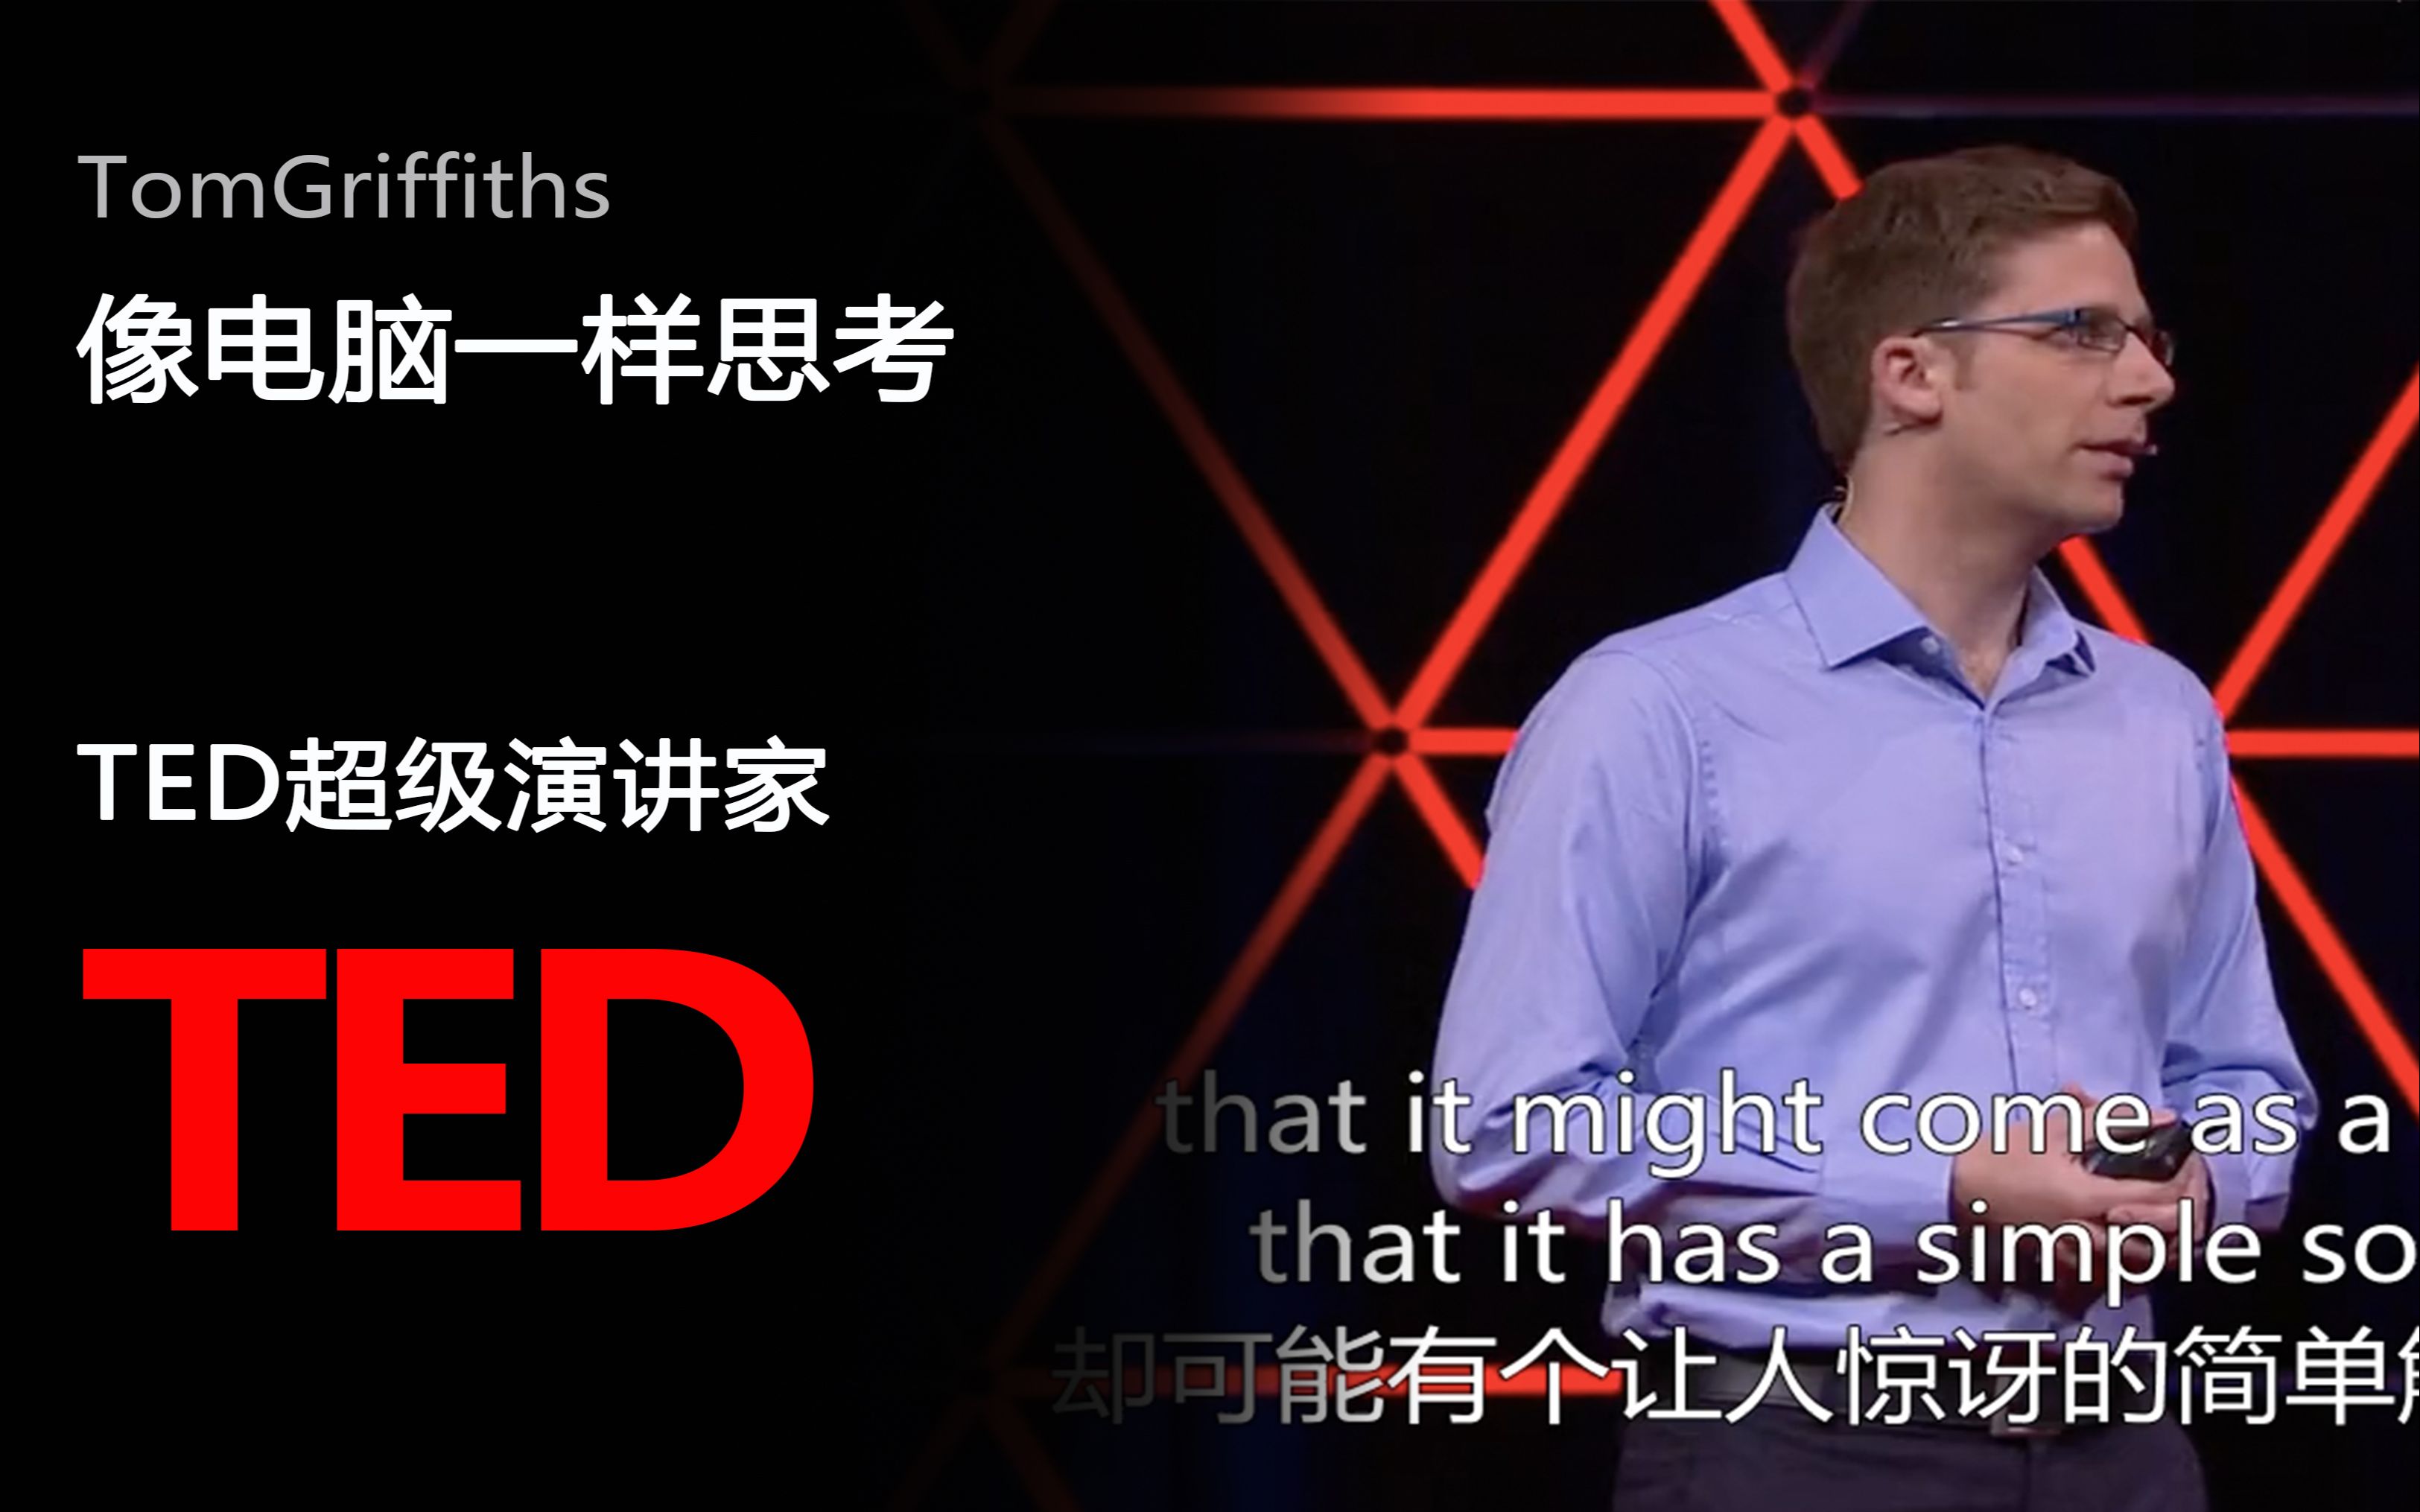 【TED演讲】帮助你优化决策的3个方法——像电脑一样思考